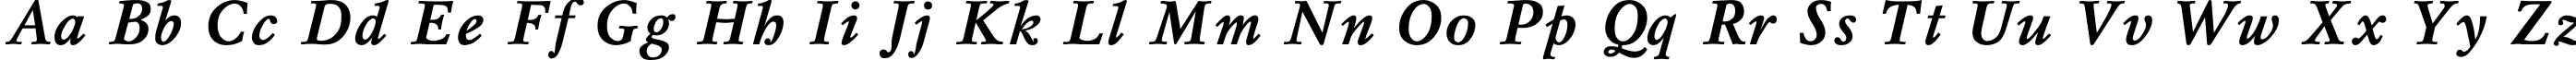 Пример написания английского алфавита шрифтом Mysl Bold Italic